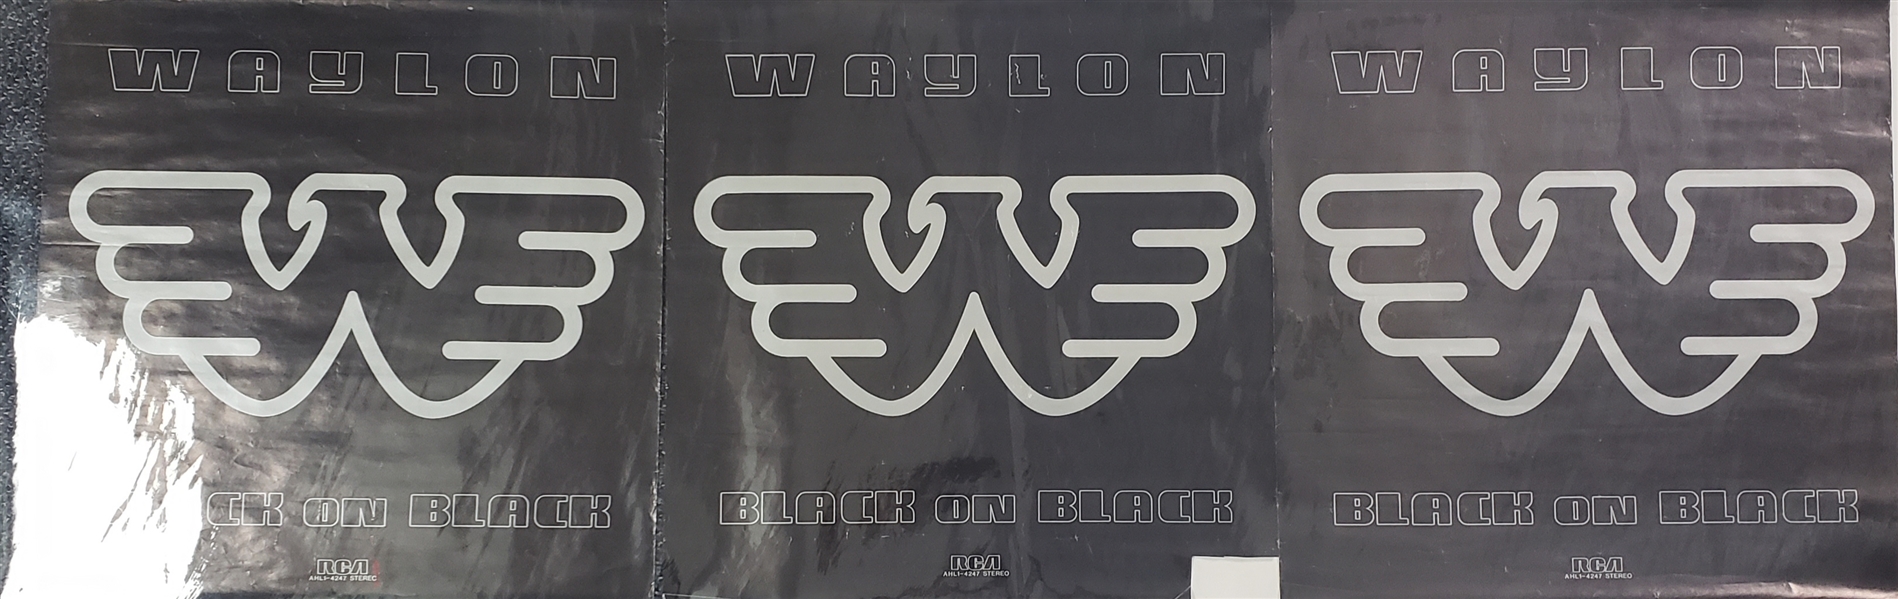 1982 Waylon Jennings Black on Black RCA 22 x 22 Posters (Lot of 3)